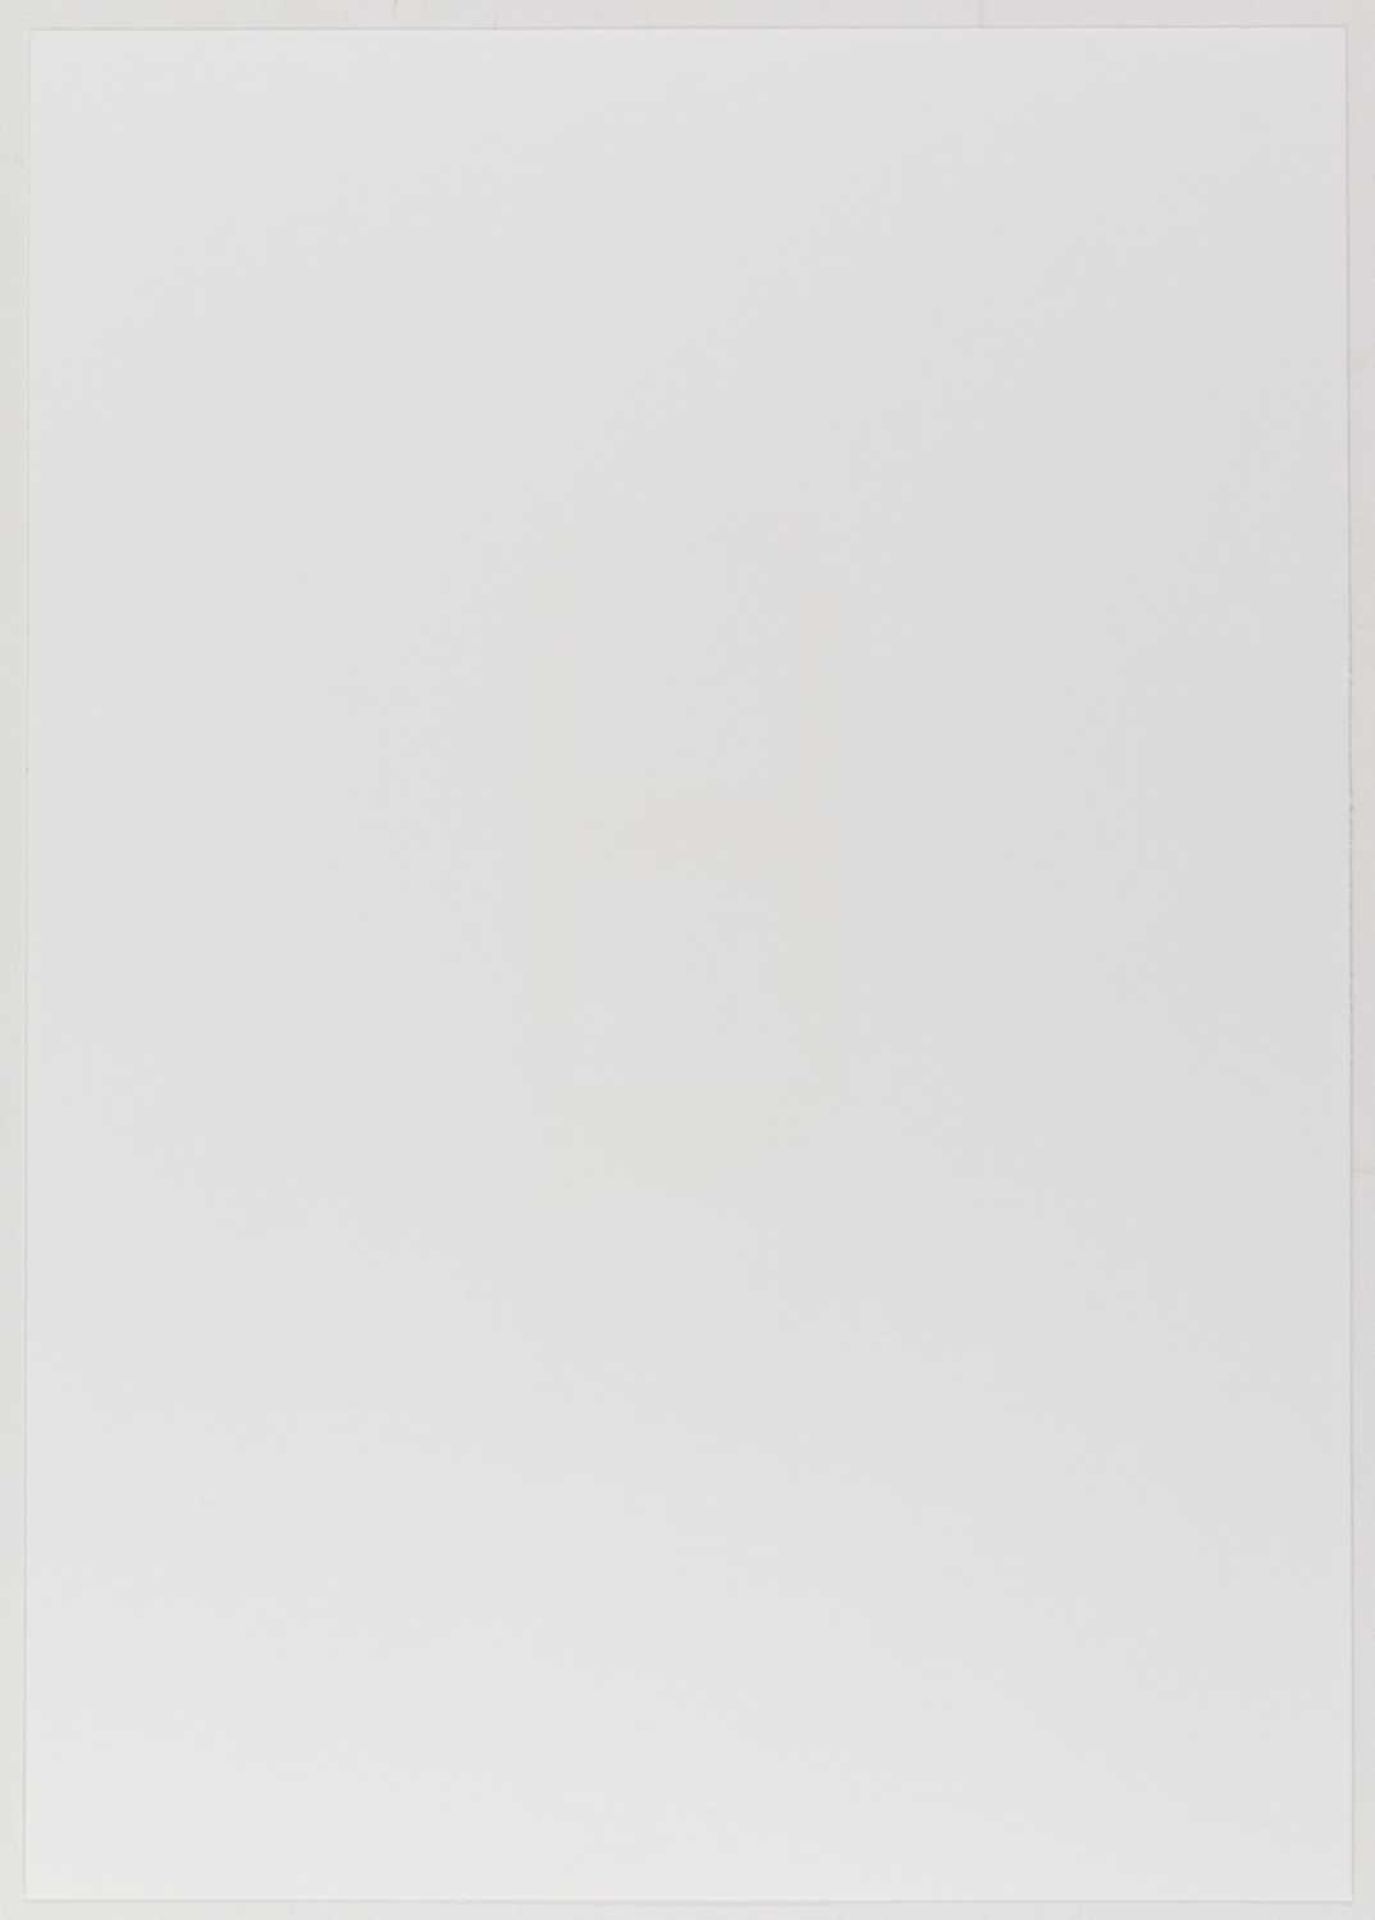 Gerhard Richter (1932 Dresden – lebt in Köln) - Image 3 of 3